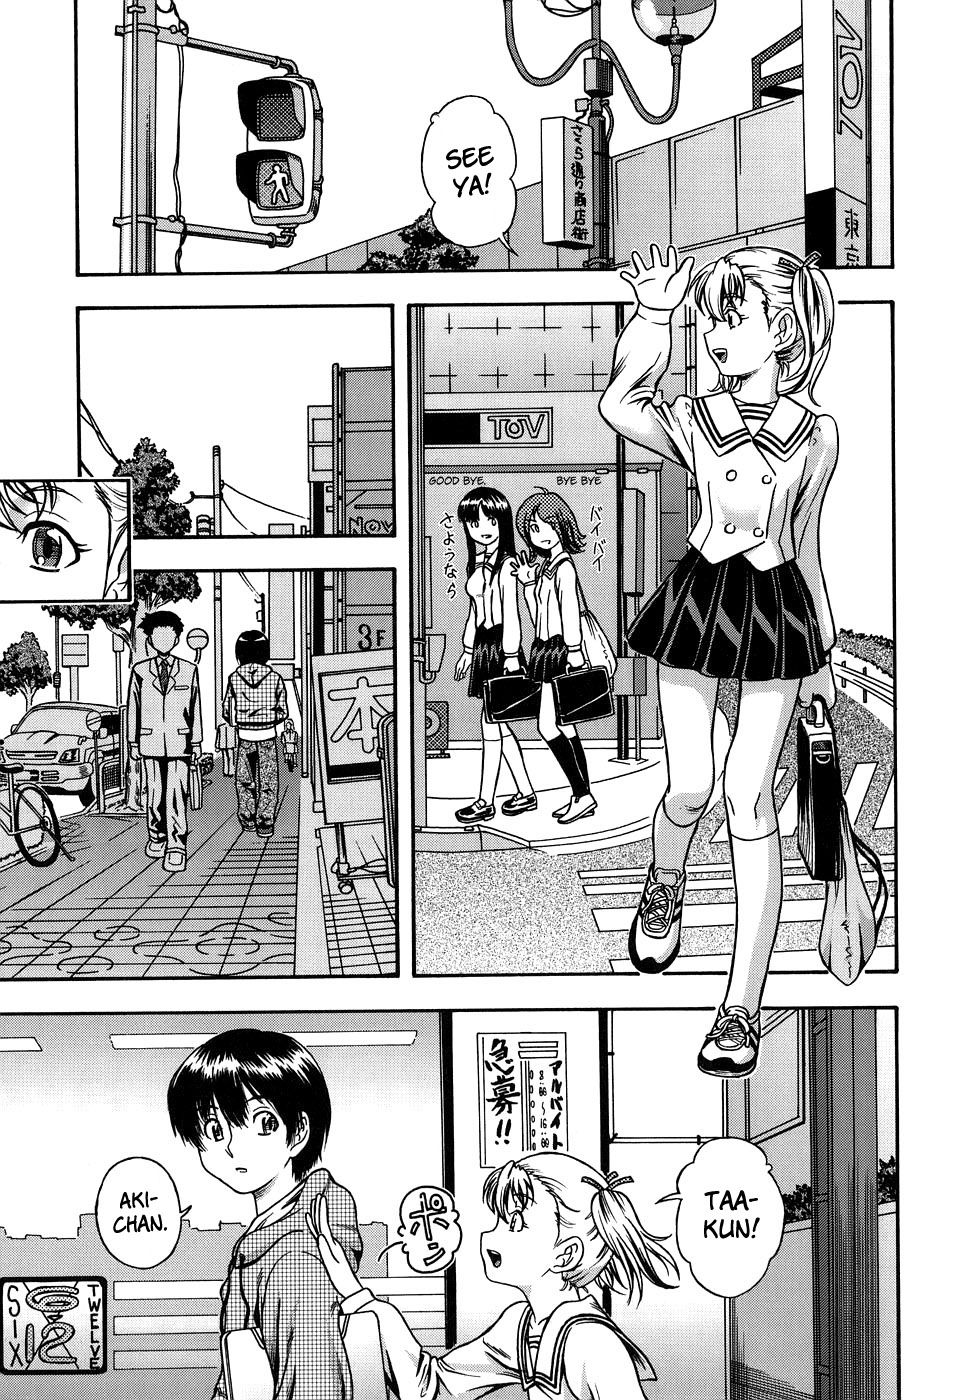 Hentai Manga Comic-Love Me Do-Chapter 6-Aki-Chan,Taa-kun And The School Swimsuit-3